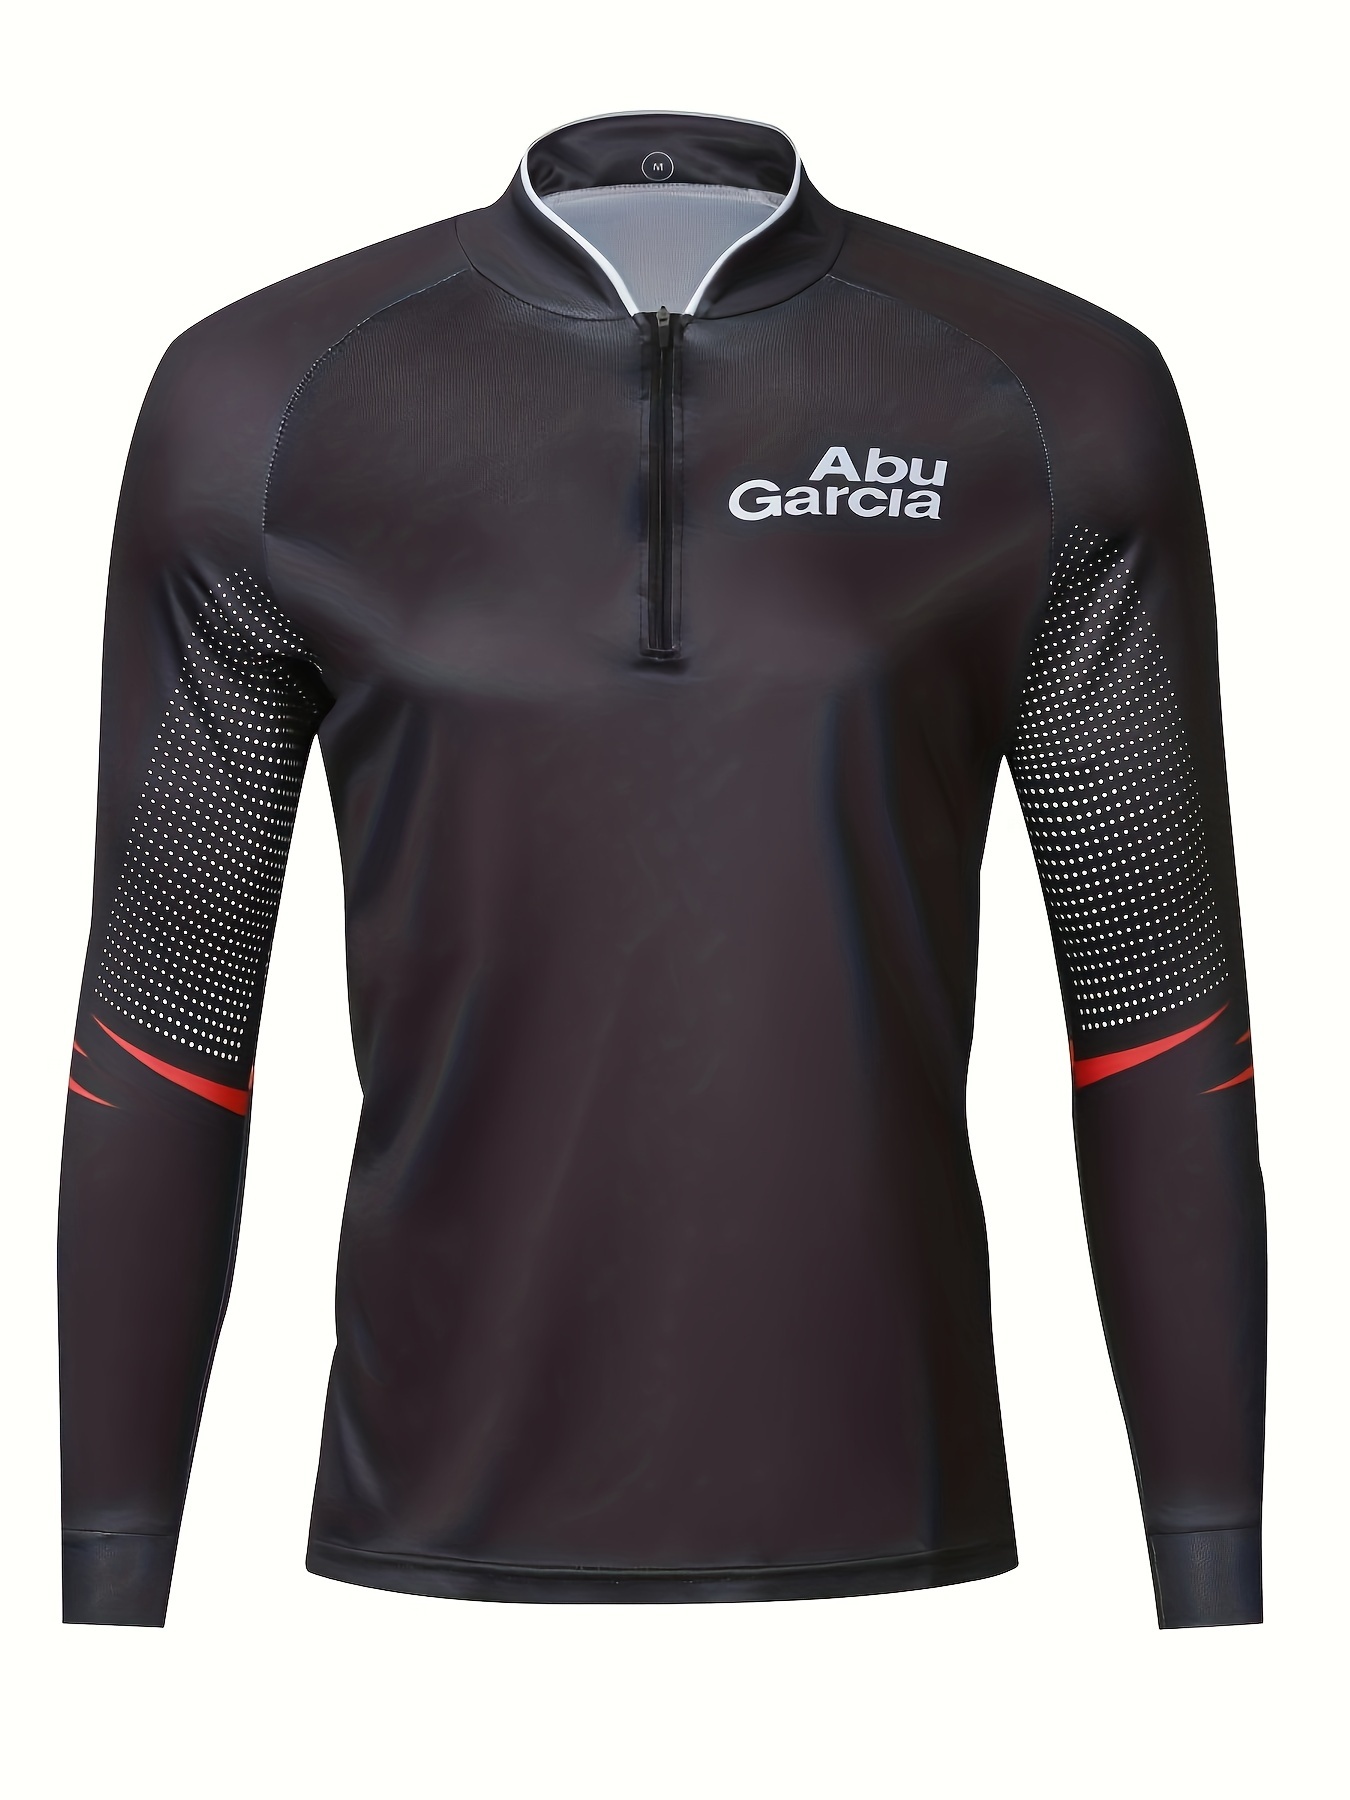 Abu Garcia Black Long Sleeve Quick Dry Fishing Shirt – Outdoor Good Store